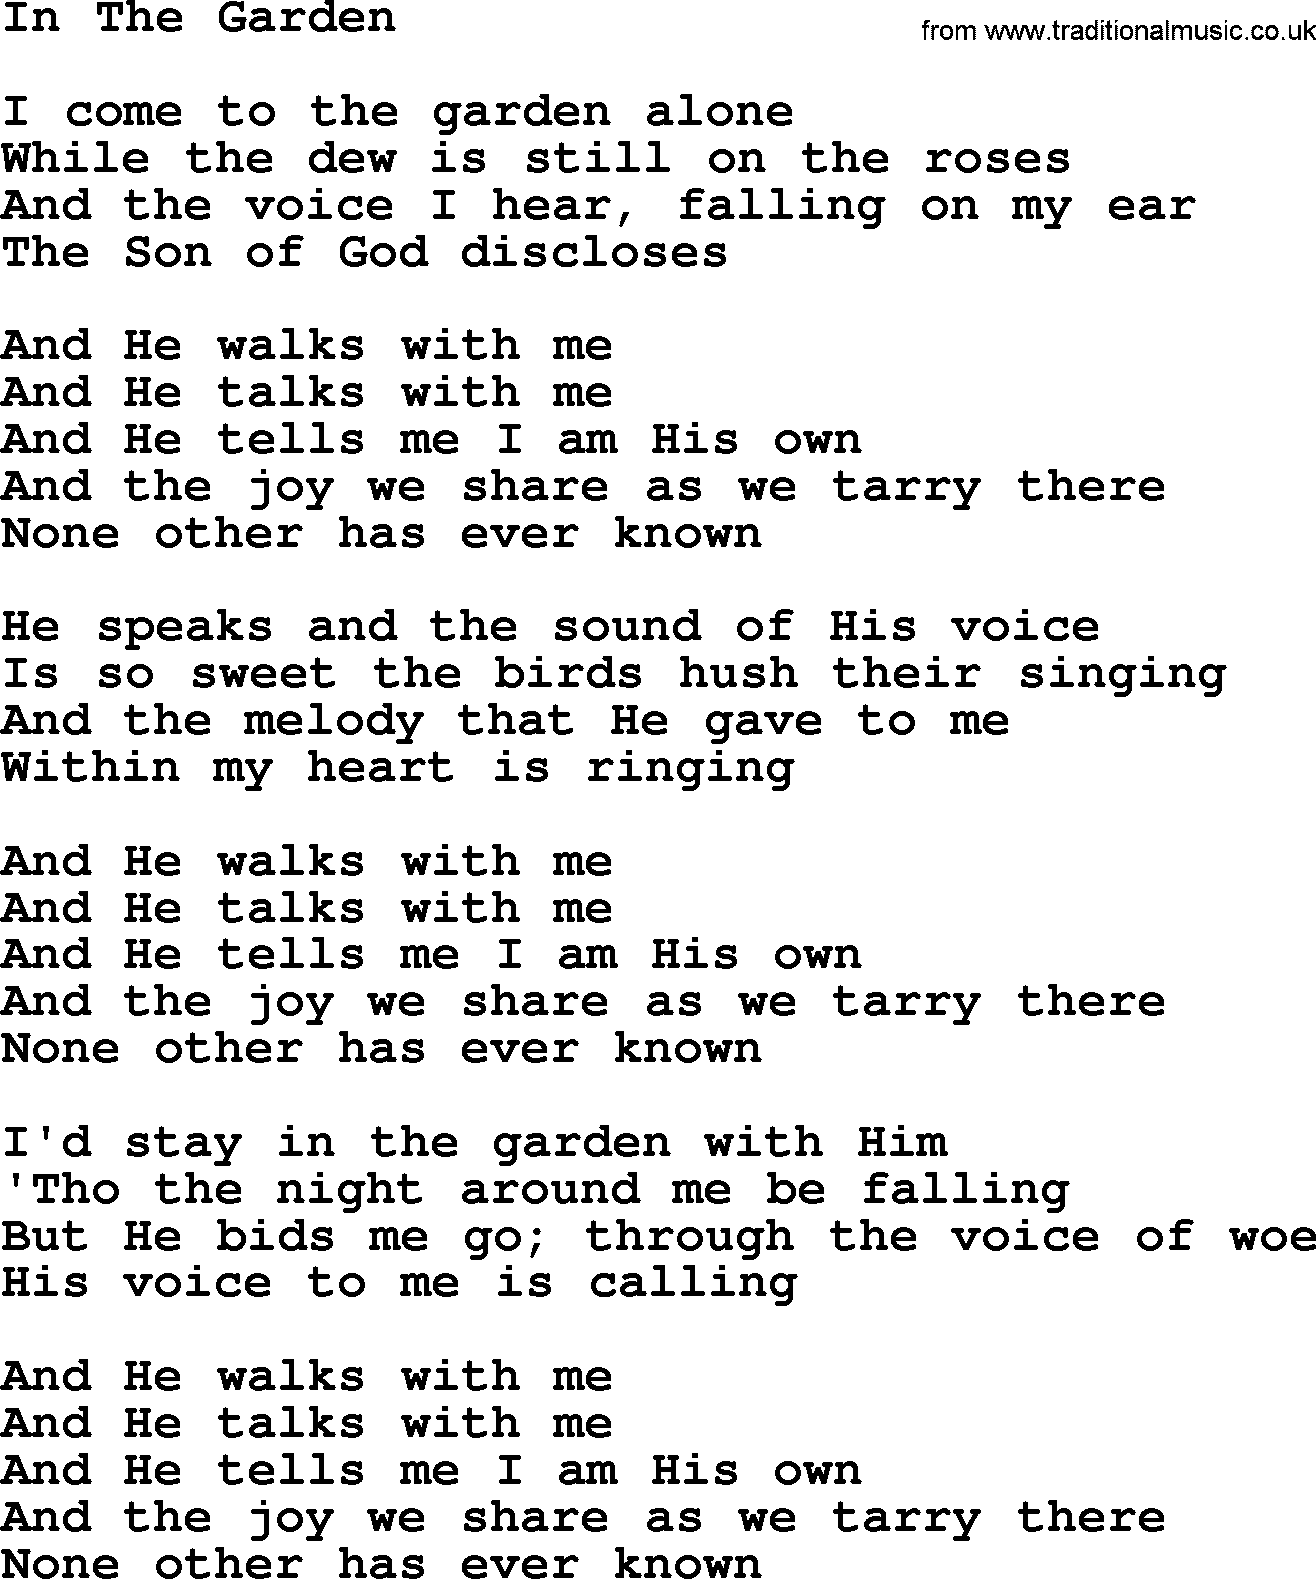 Willie Nelson song In The Garden, lyrics